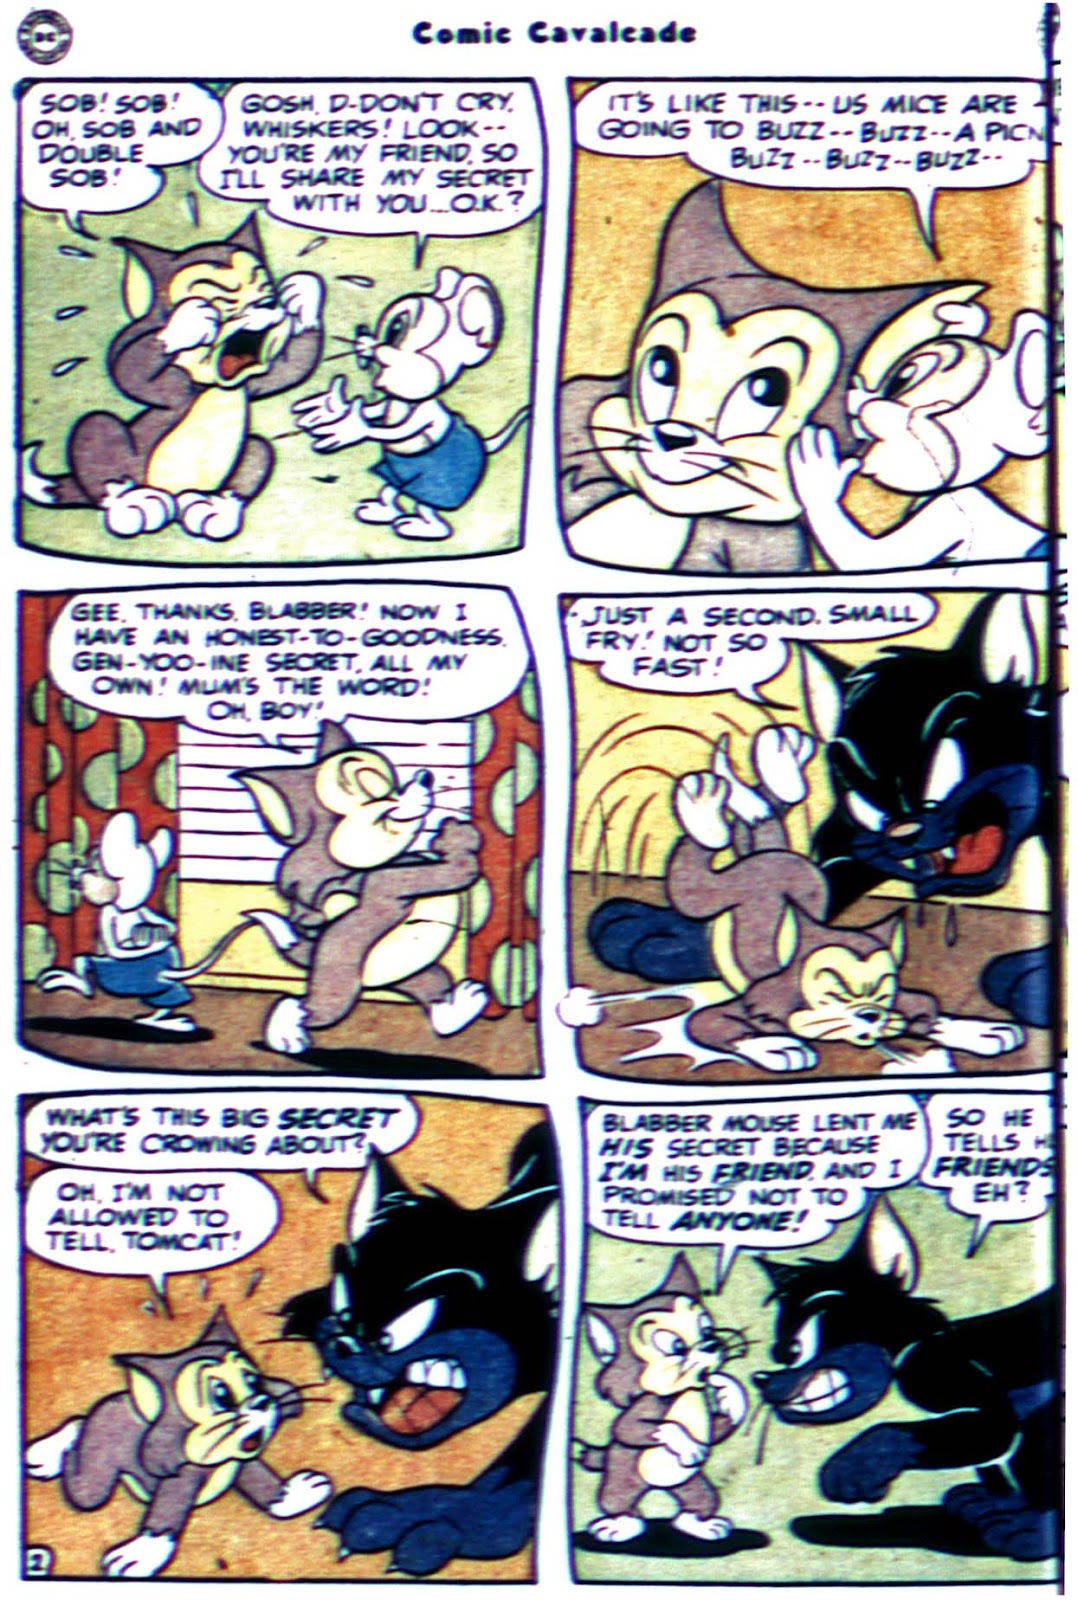 Comic Cavalcade issue 30 - Page 14